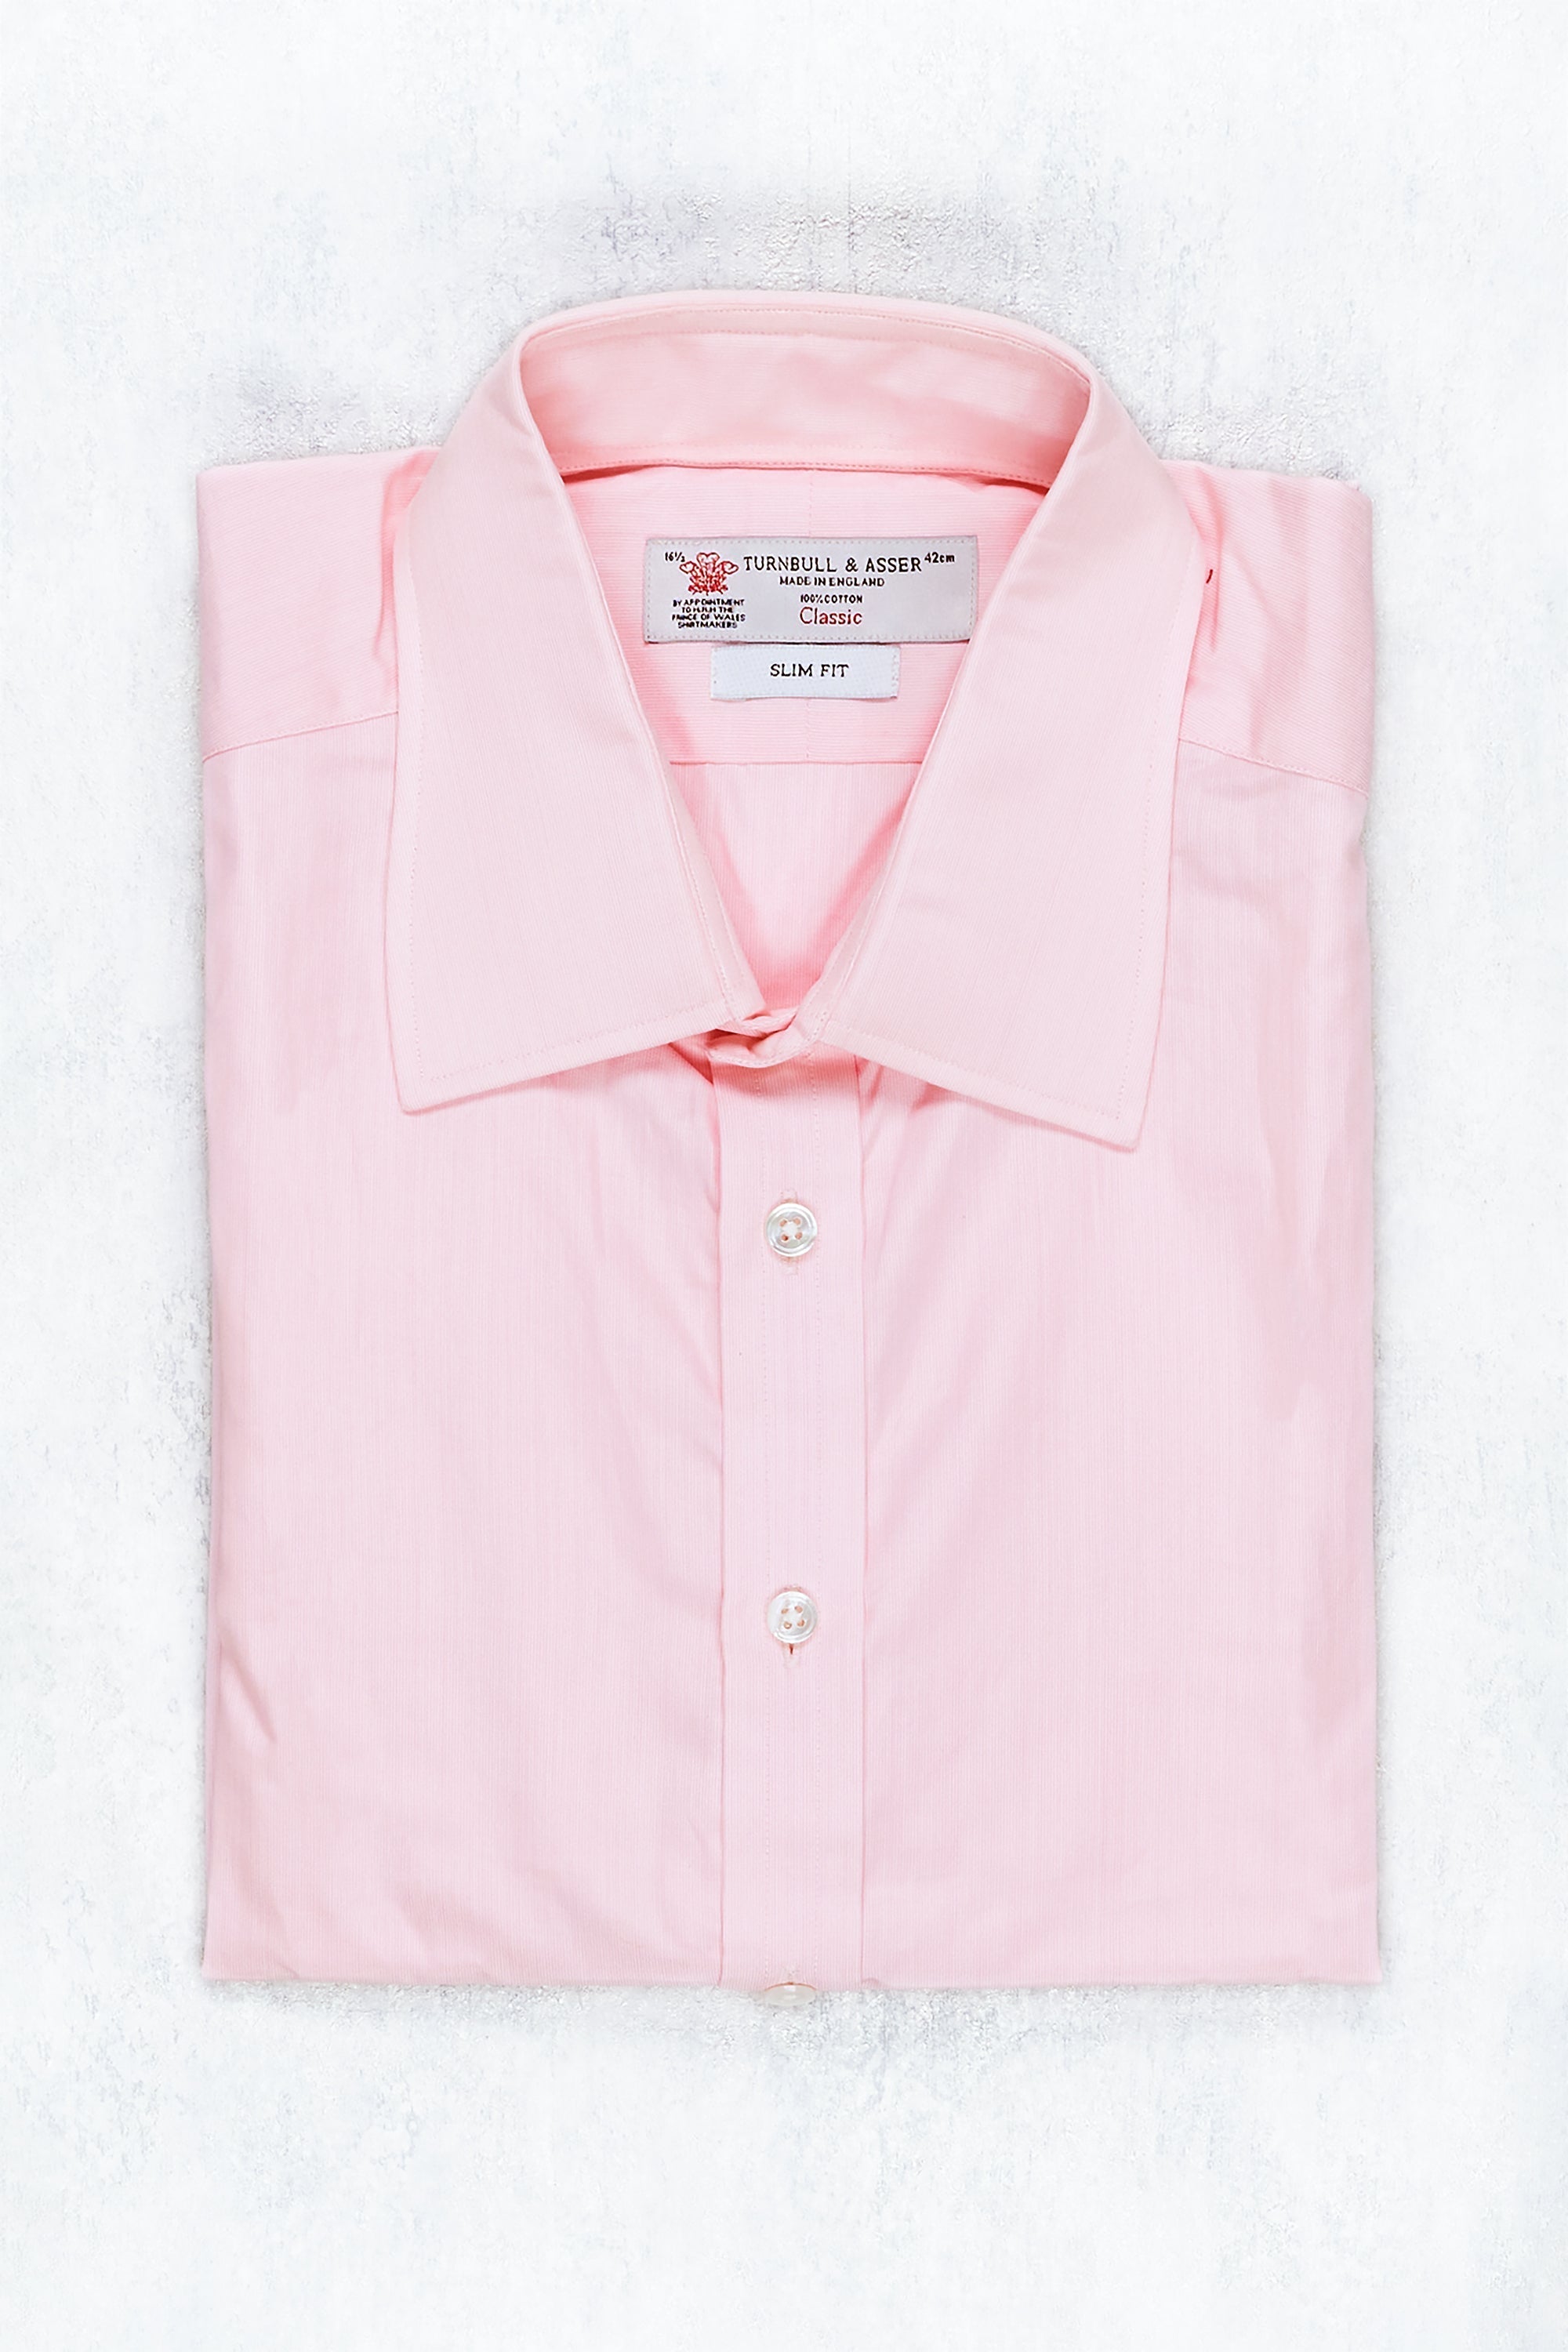 Turnbull & Asser Pink Cotton Spread Collar Shirt